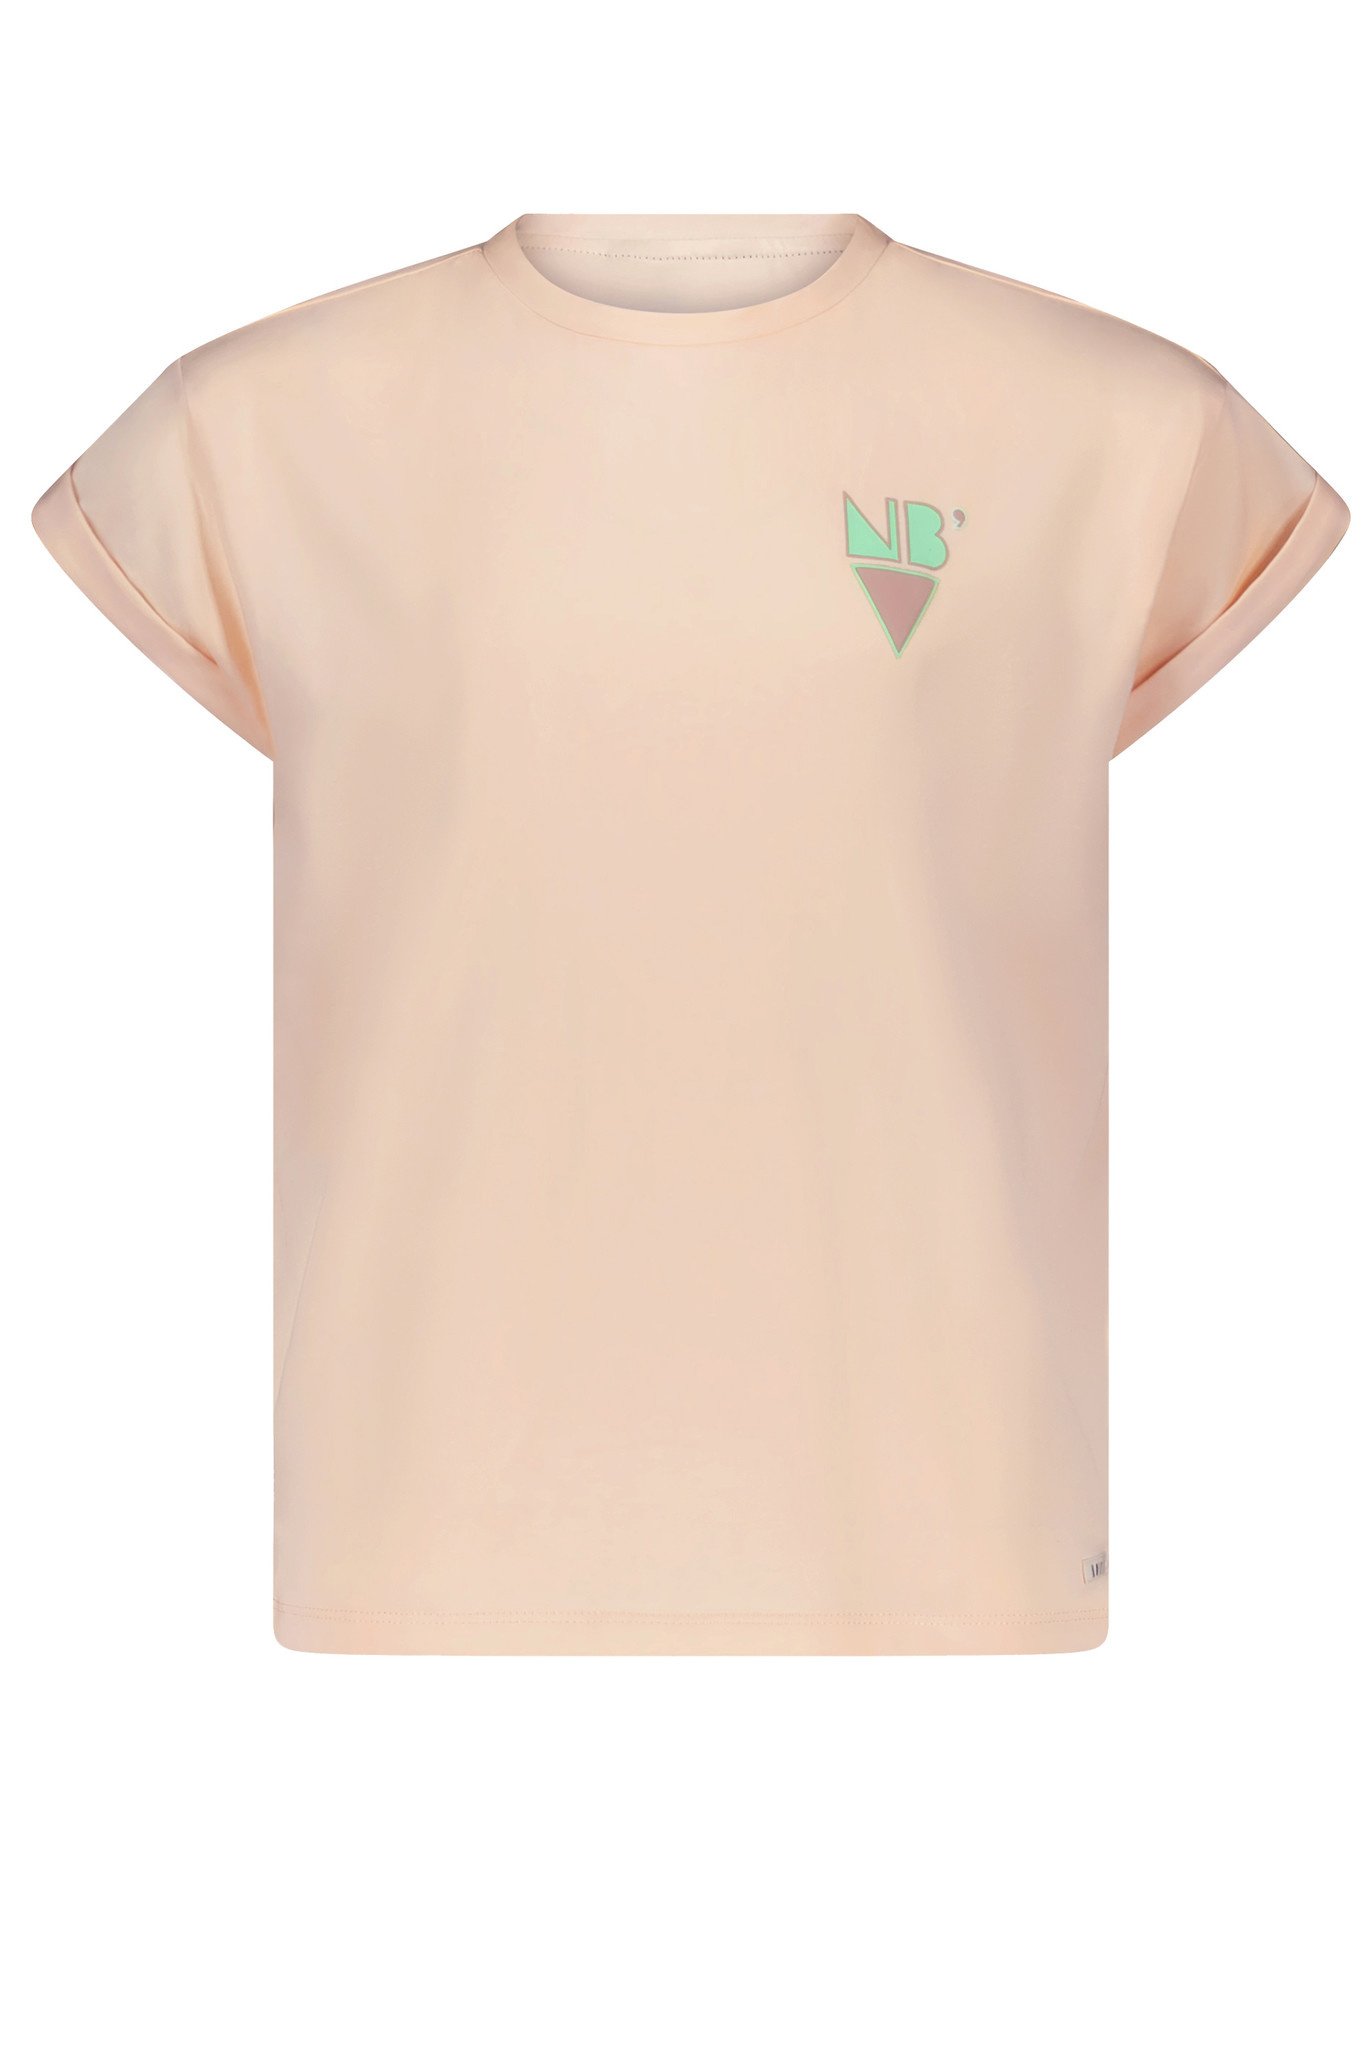 NoBell meiden t-shirt Kasis print Love Peace Rosy Sand